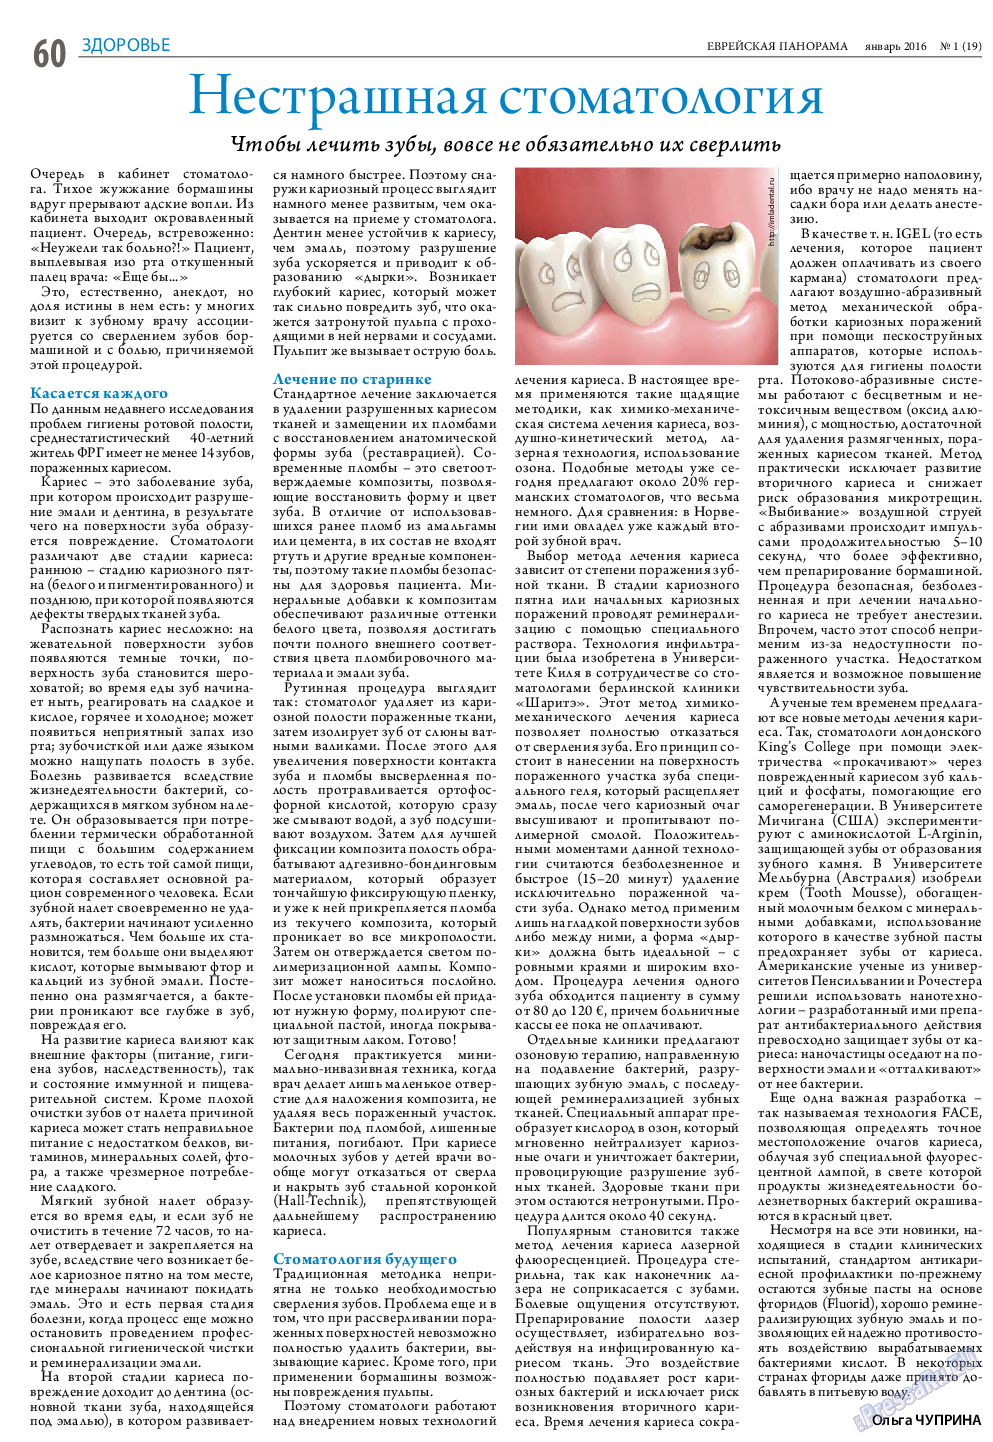 Еврейская панорама, газета. 2016 №1 стр.60